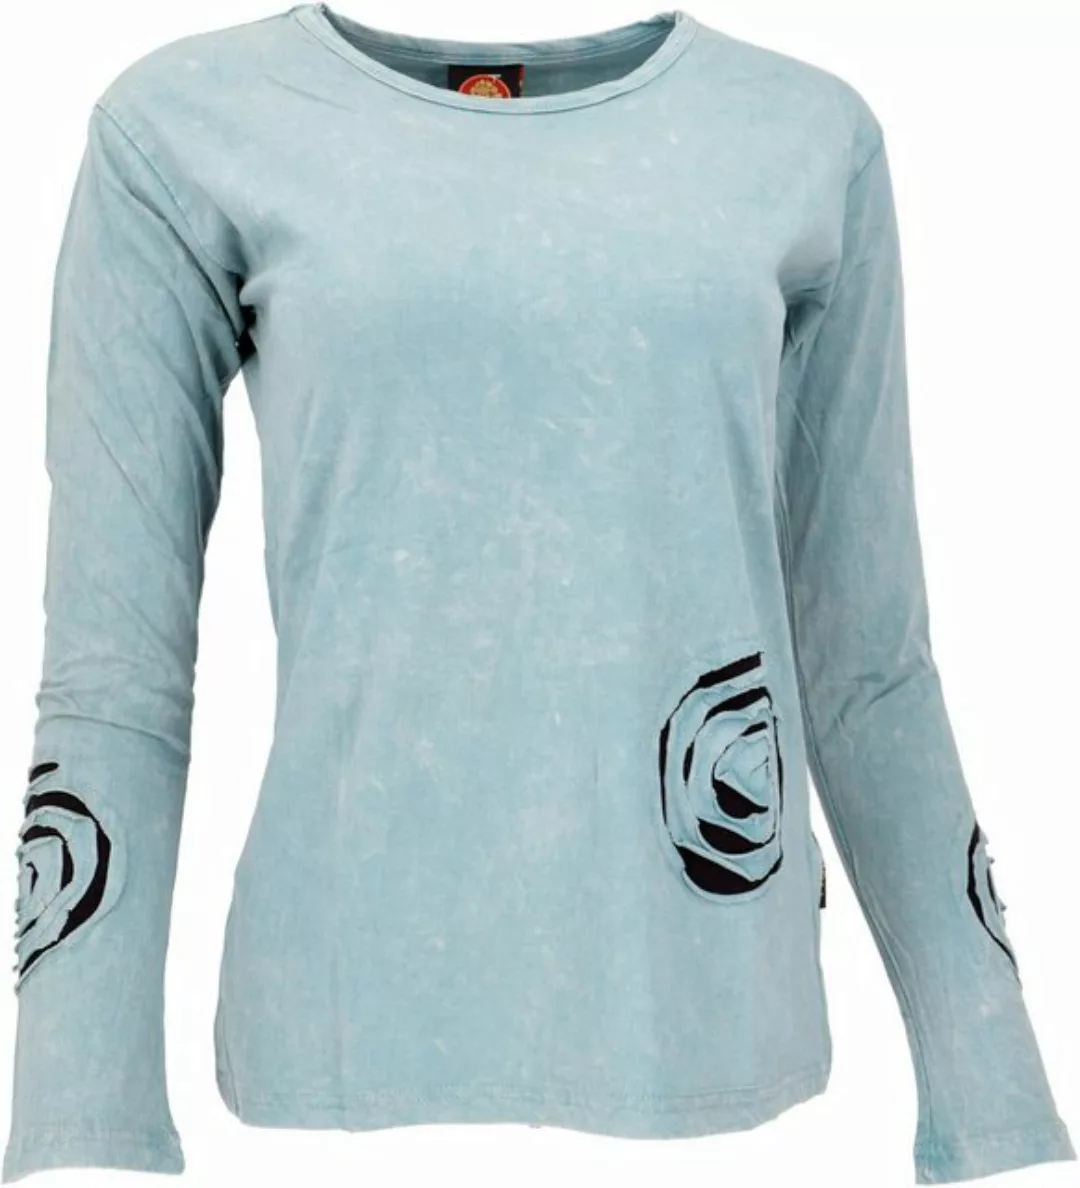 Guru-Shop Longsleeve Langarmshirt Spirale - jeansblau alternative Bekleidun günstig online kaufen